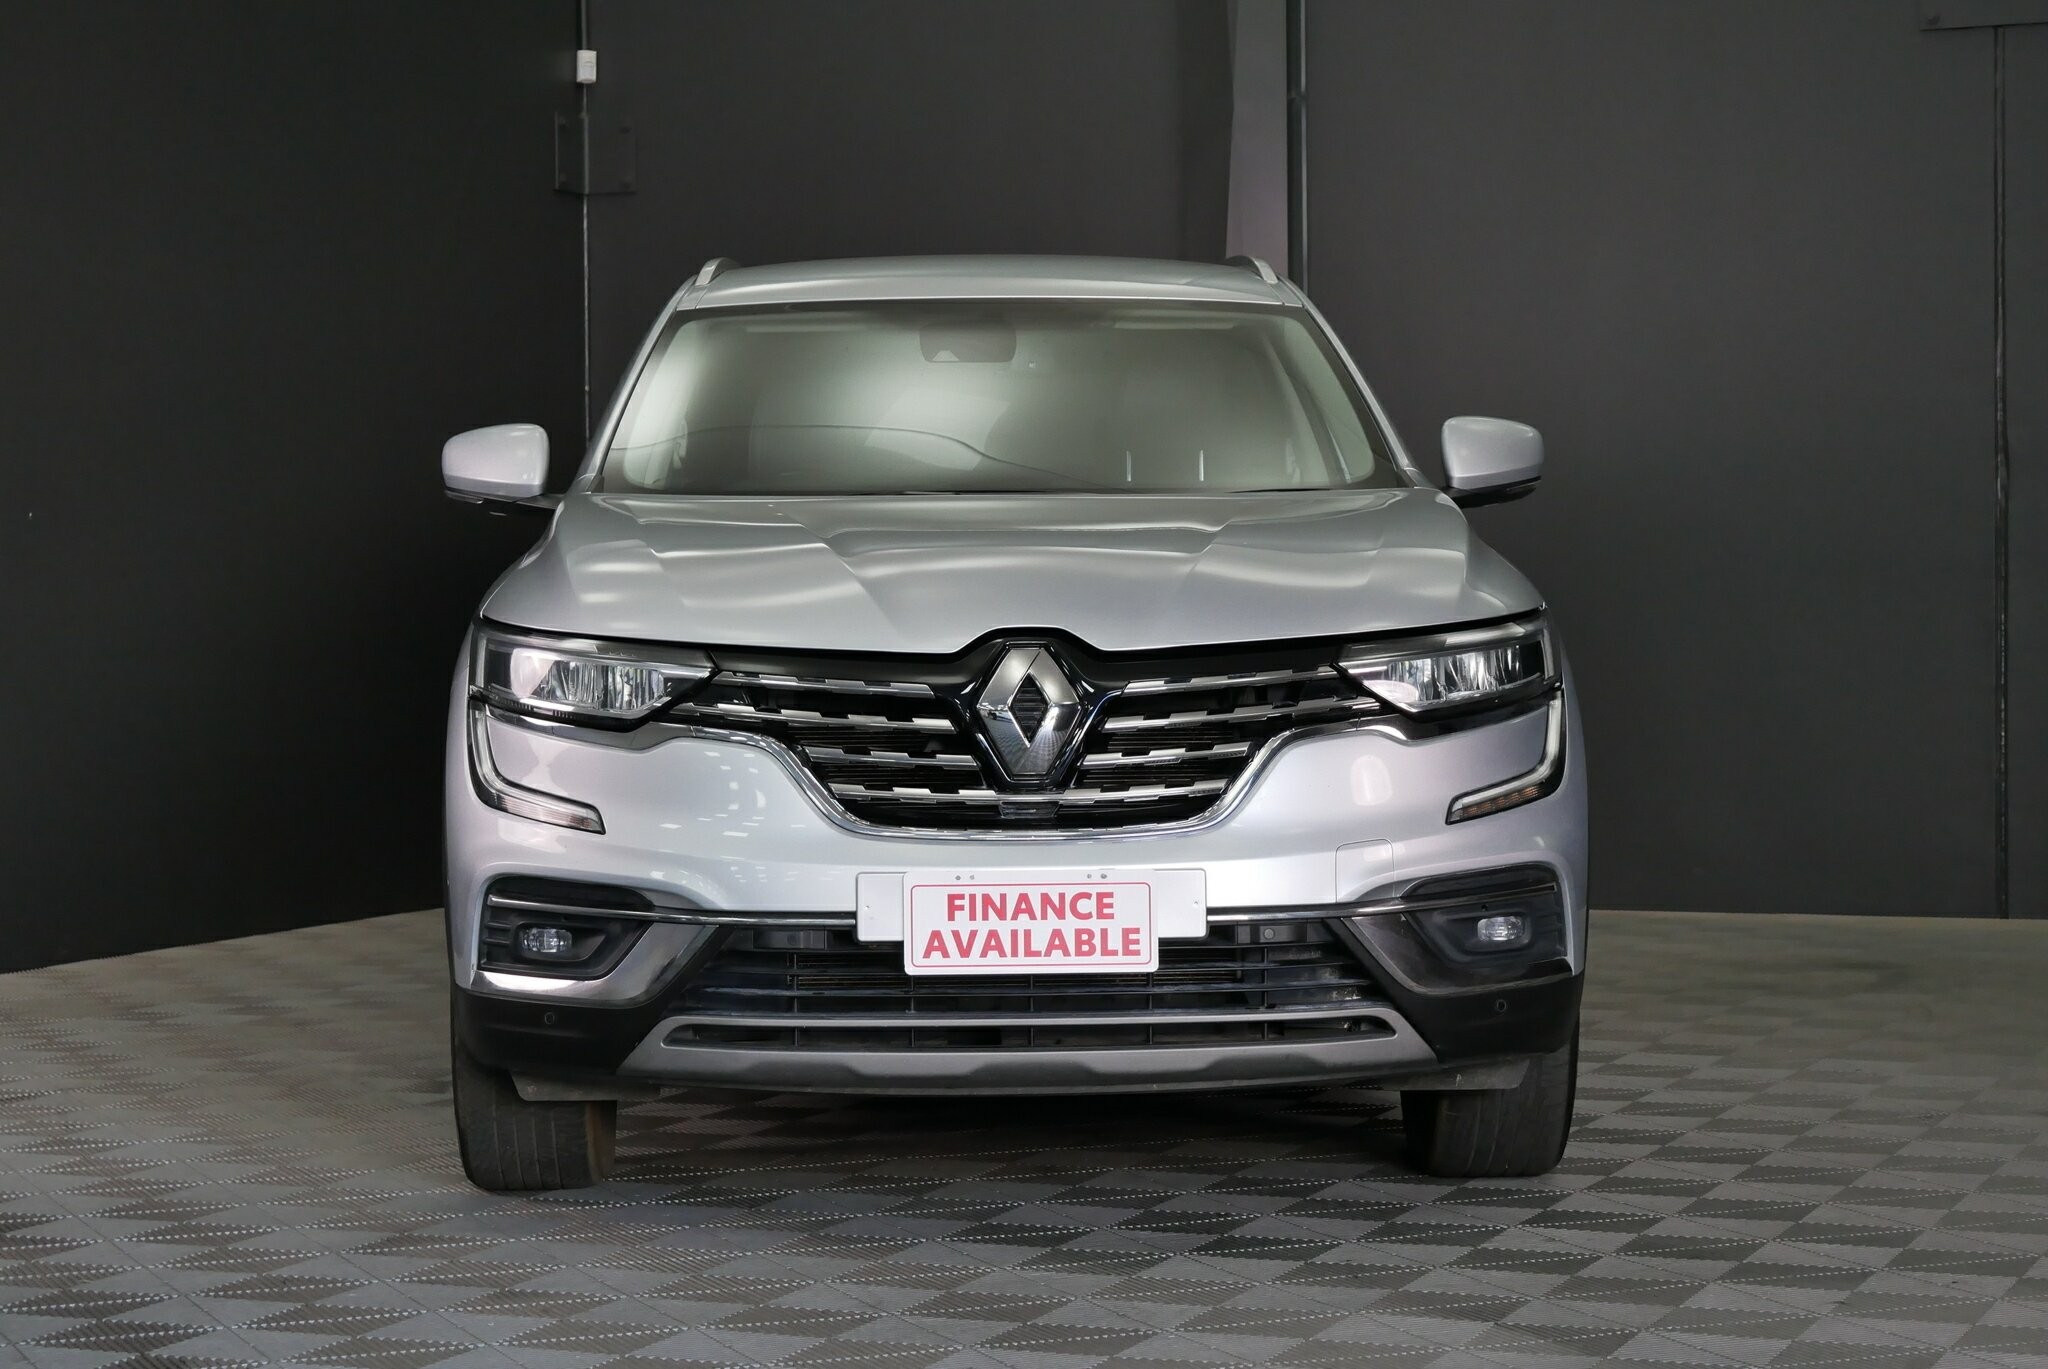 Renault Koleos image 2